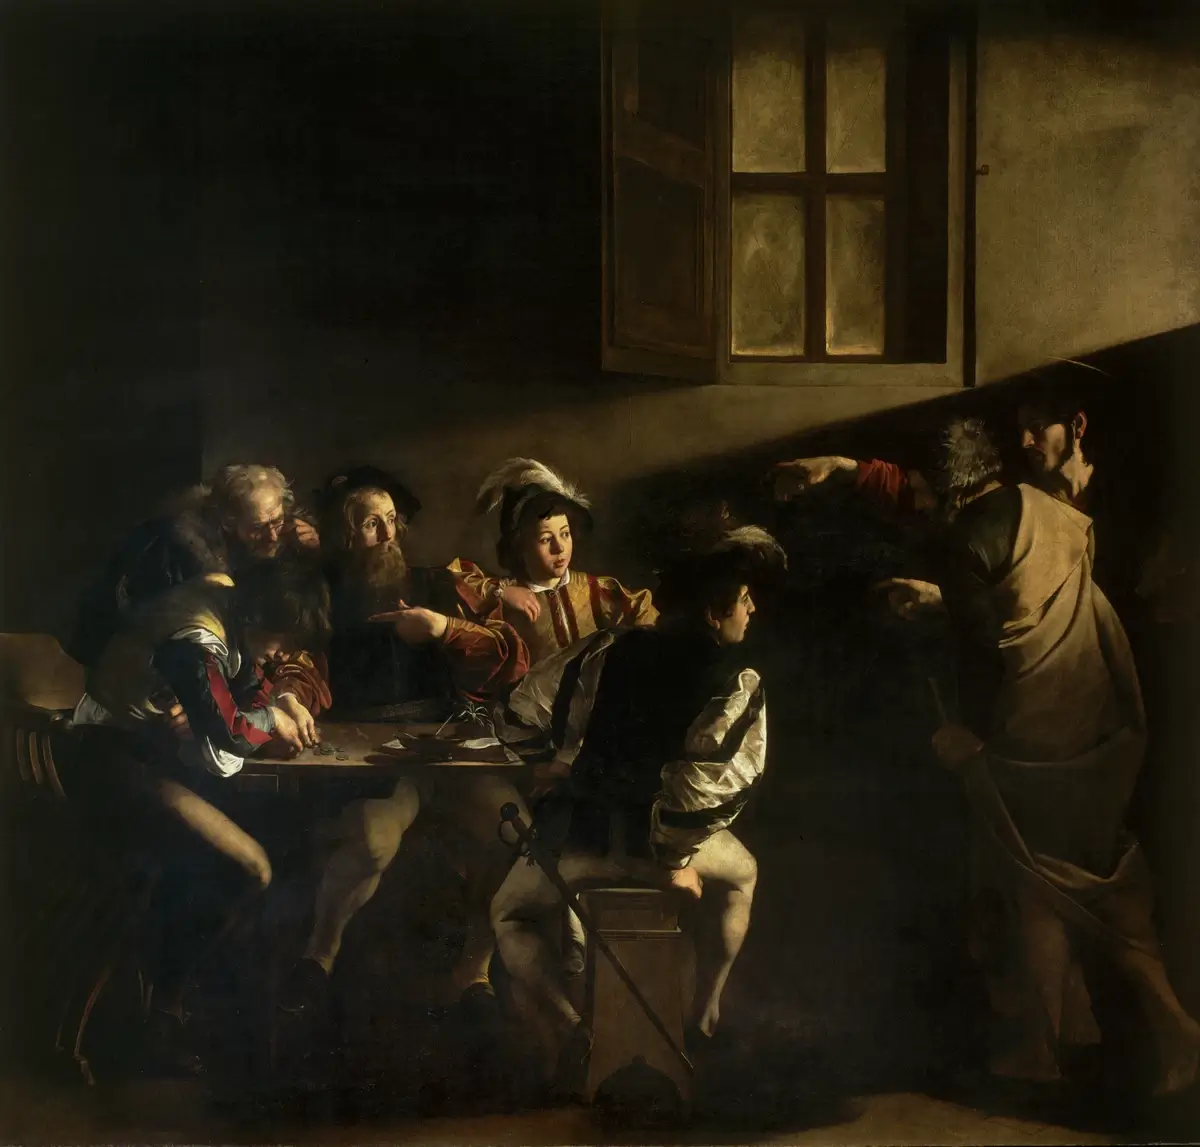 Caravaggio, "The Calling of St. Matthew", 1600